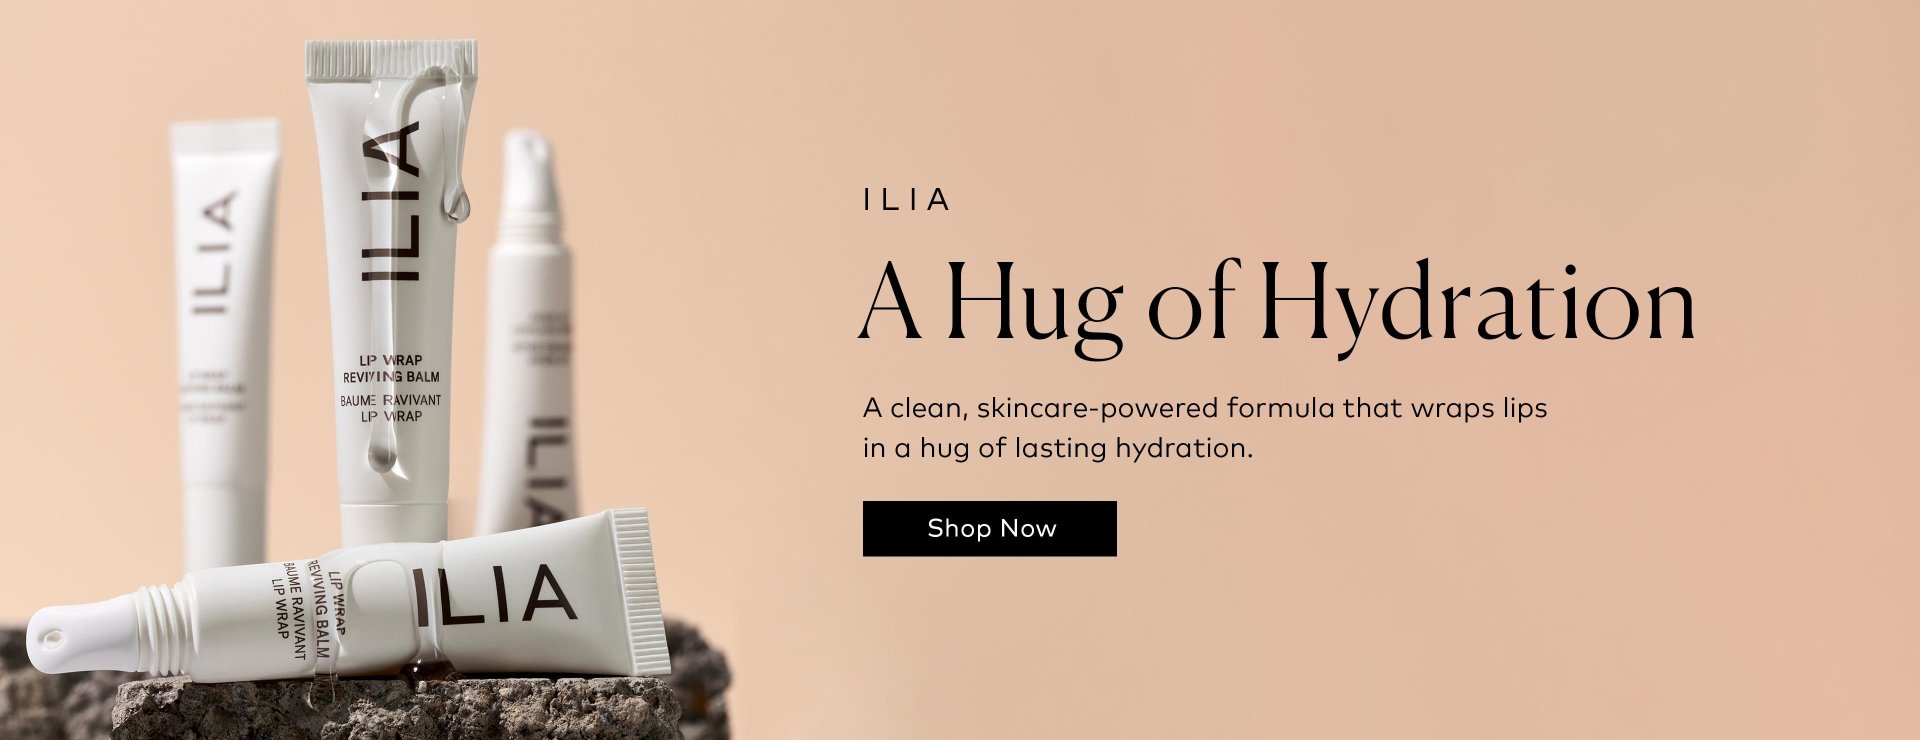 Shop ILIA's Lip Wrap Reviving Balm on Beautylish.com